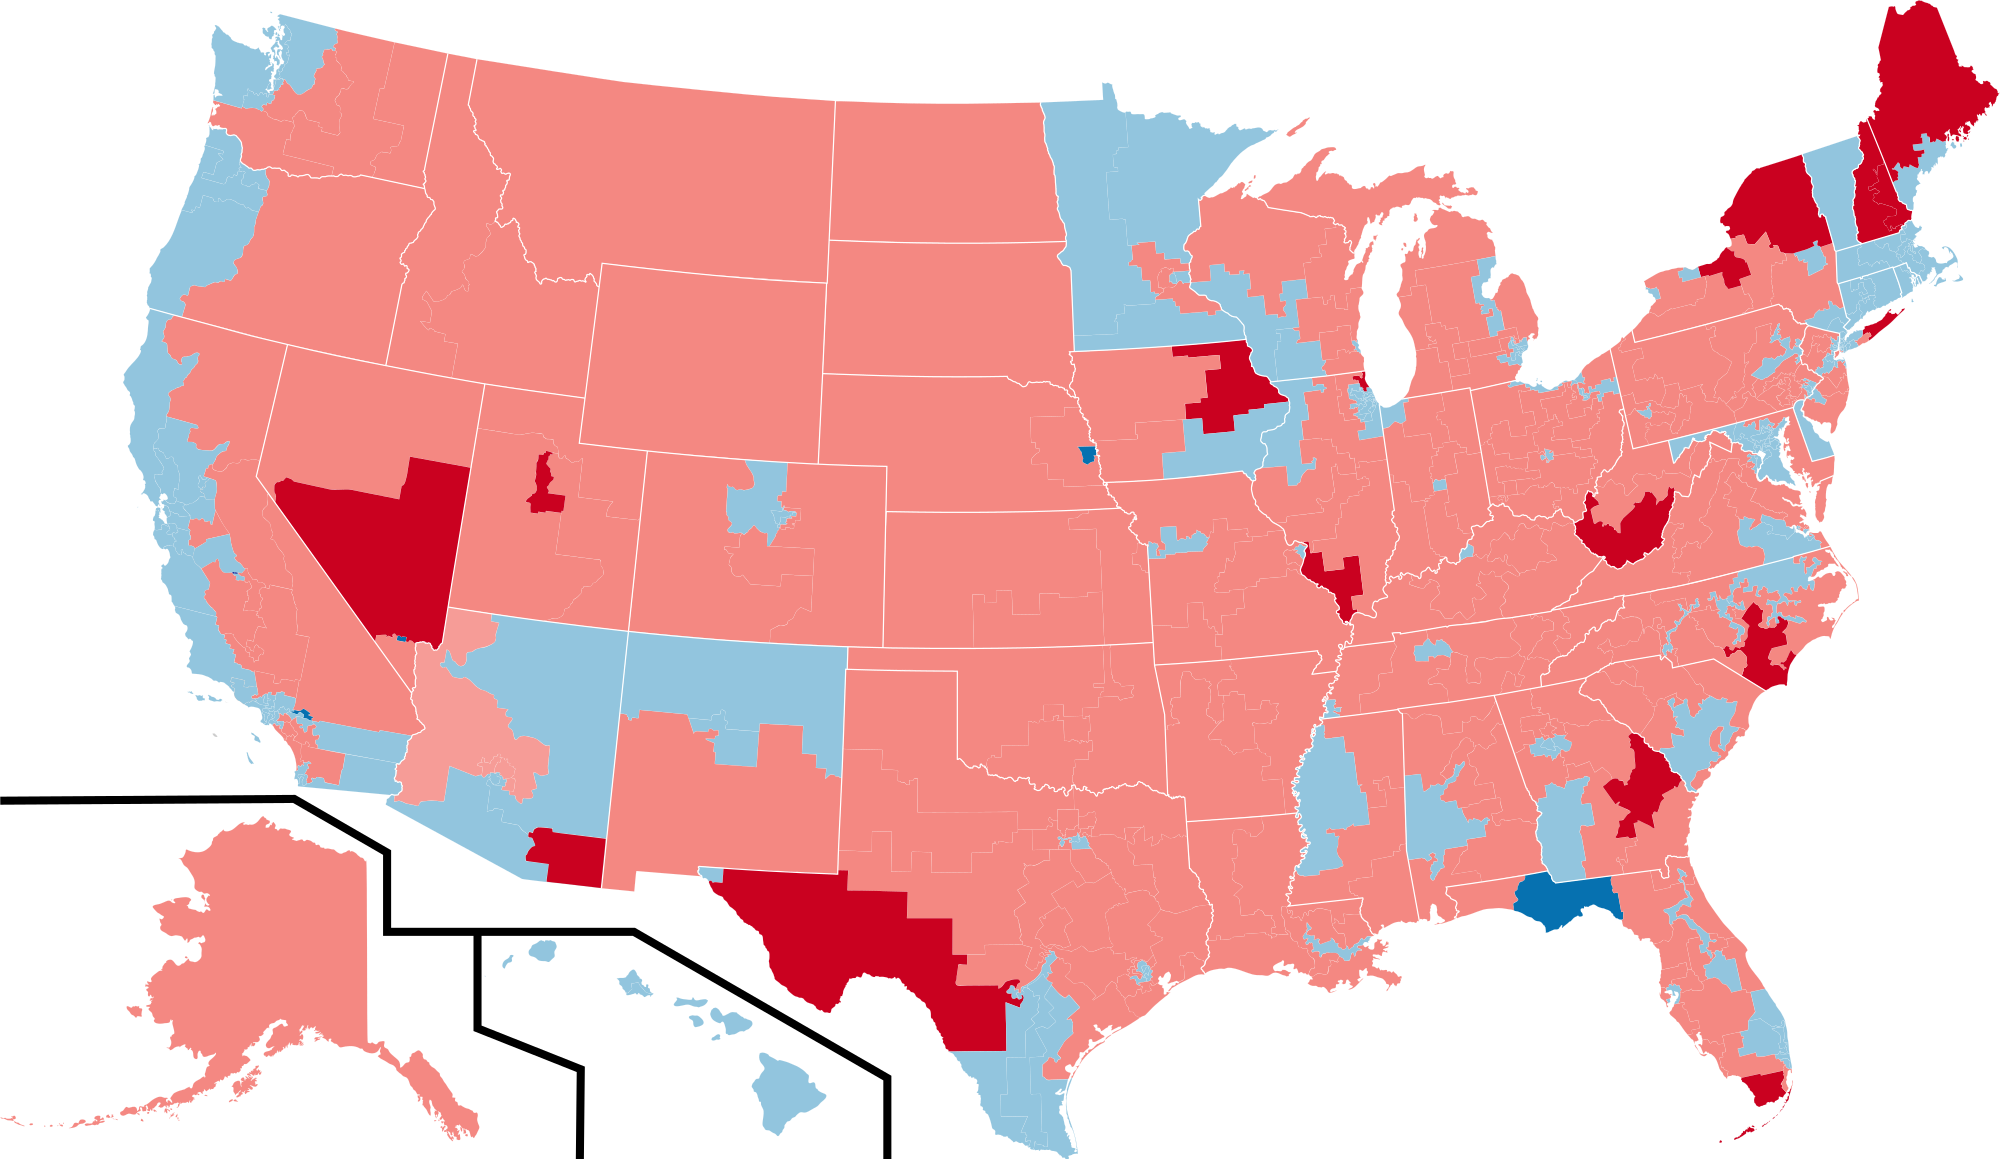 Us election results map. Politics clipart gerrymandering